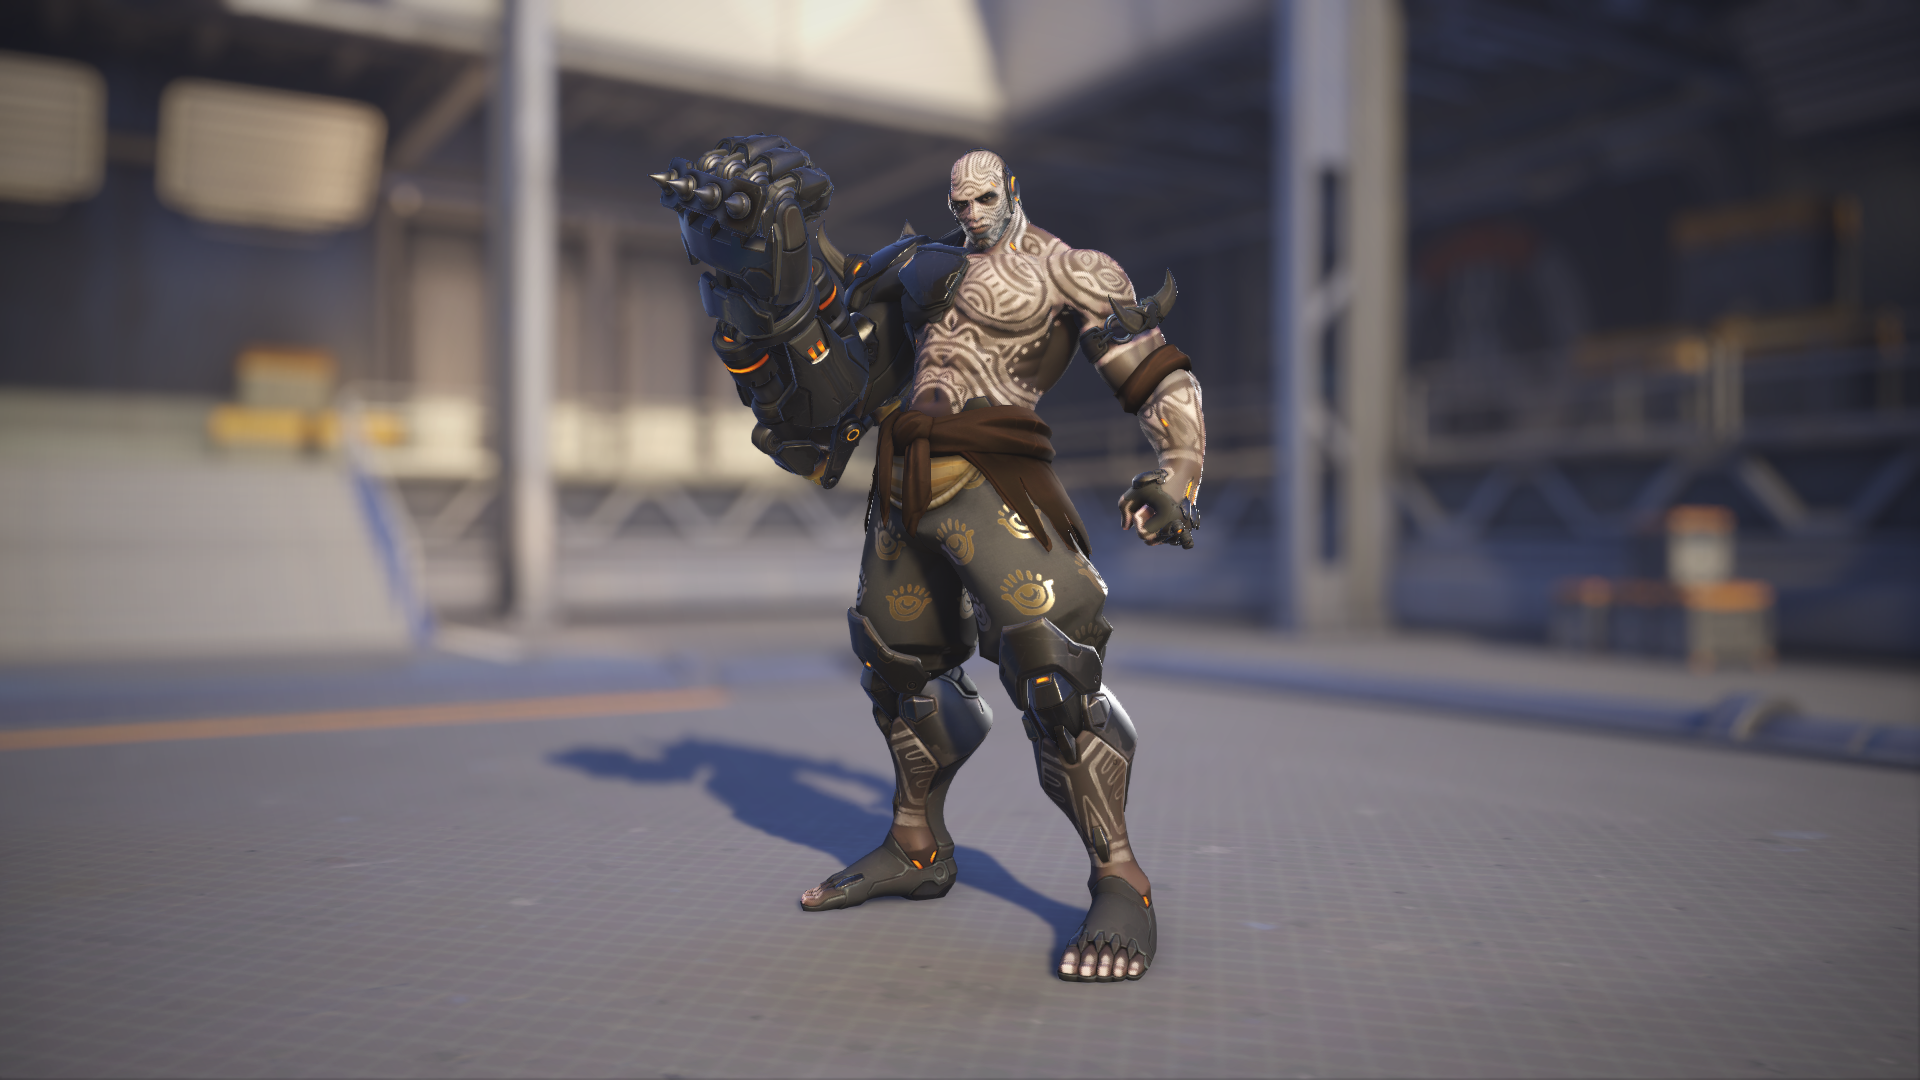 Doomfist models his Painted skin in Overwatch 2.